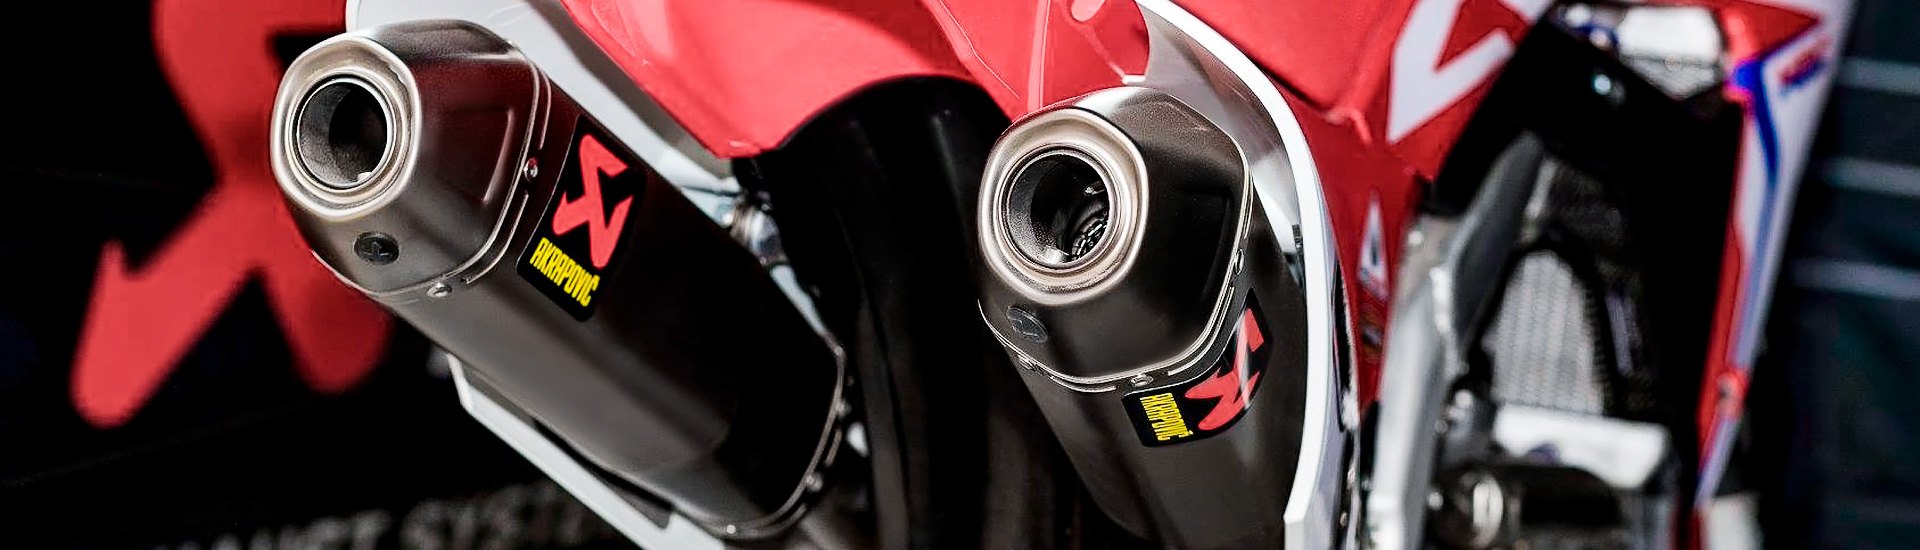 JFG RACING Full Exhaust Muffler System Pipe Slip On For Yamaha TTR230 TTR 230 2005-2016 Motorcycle 